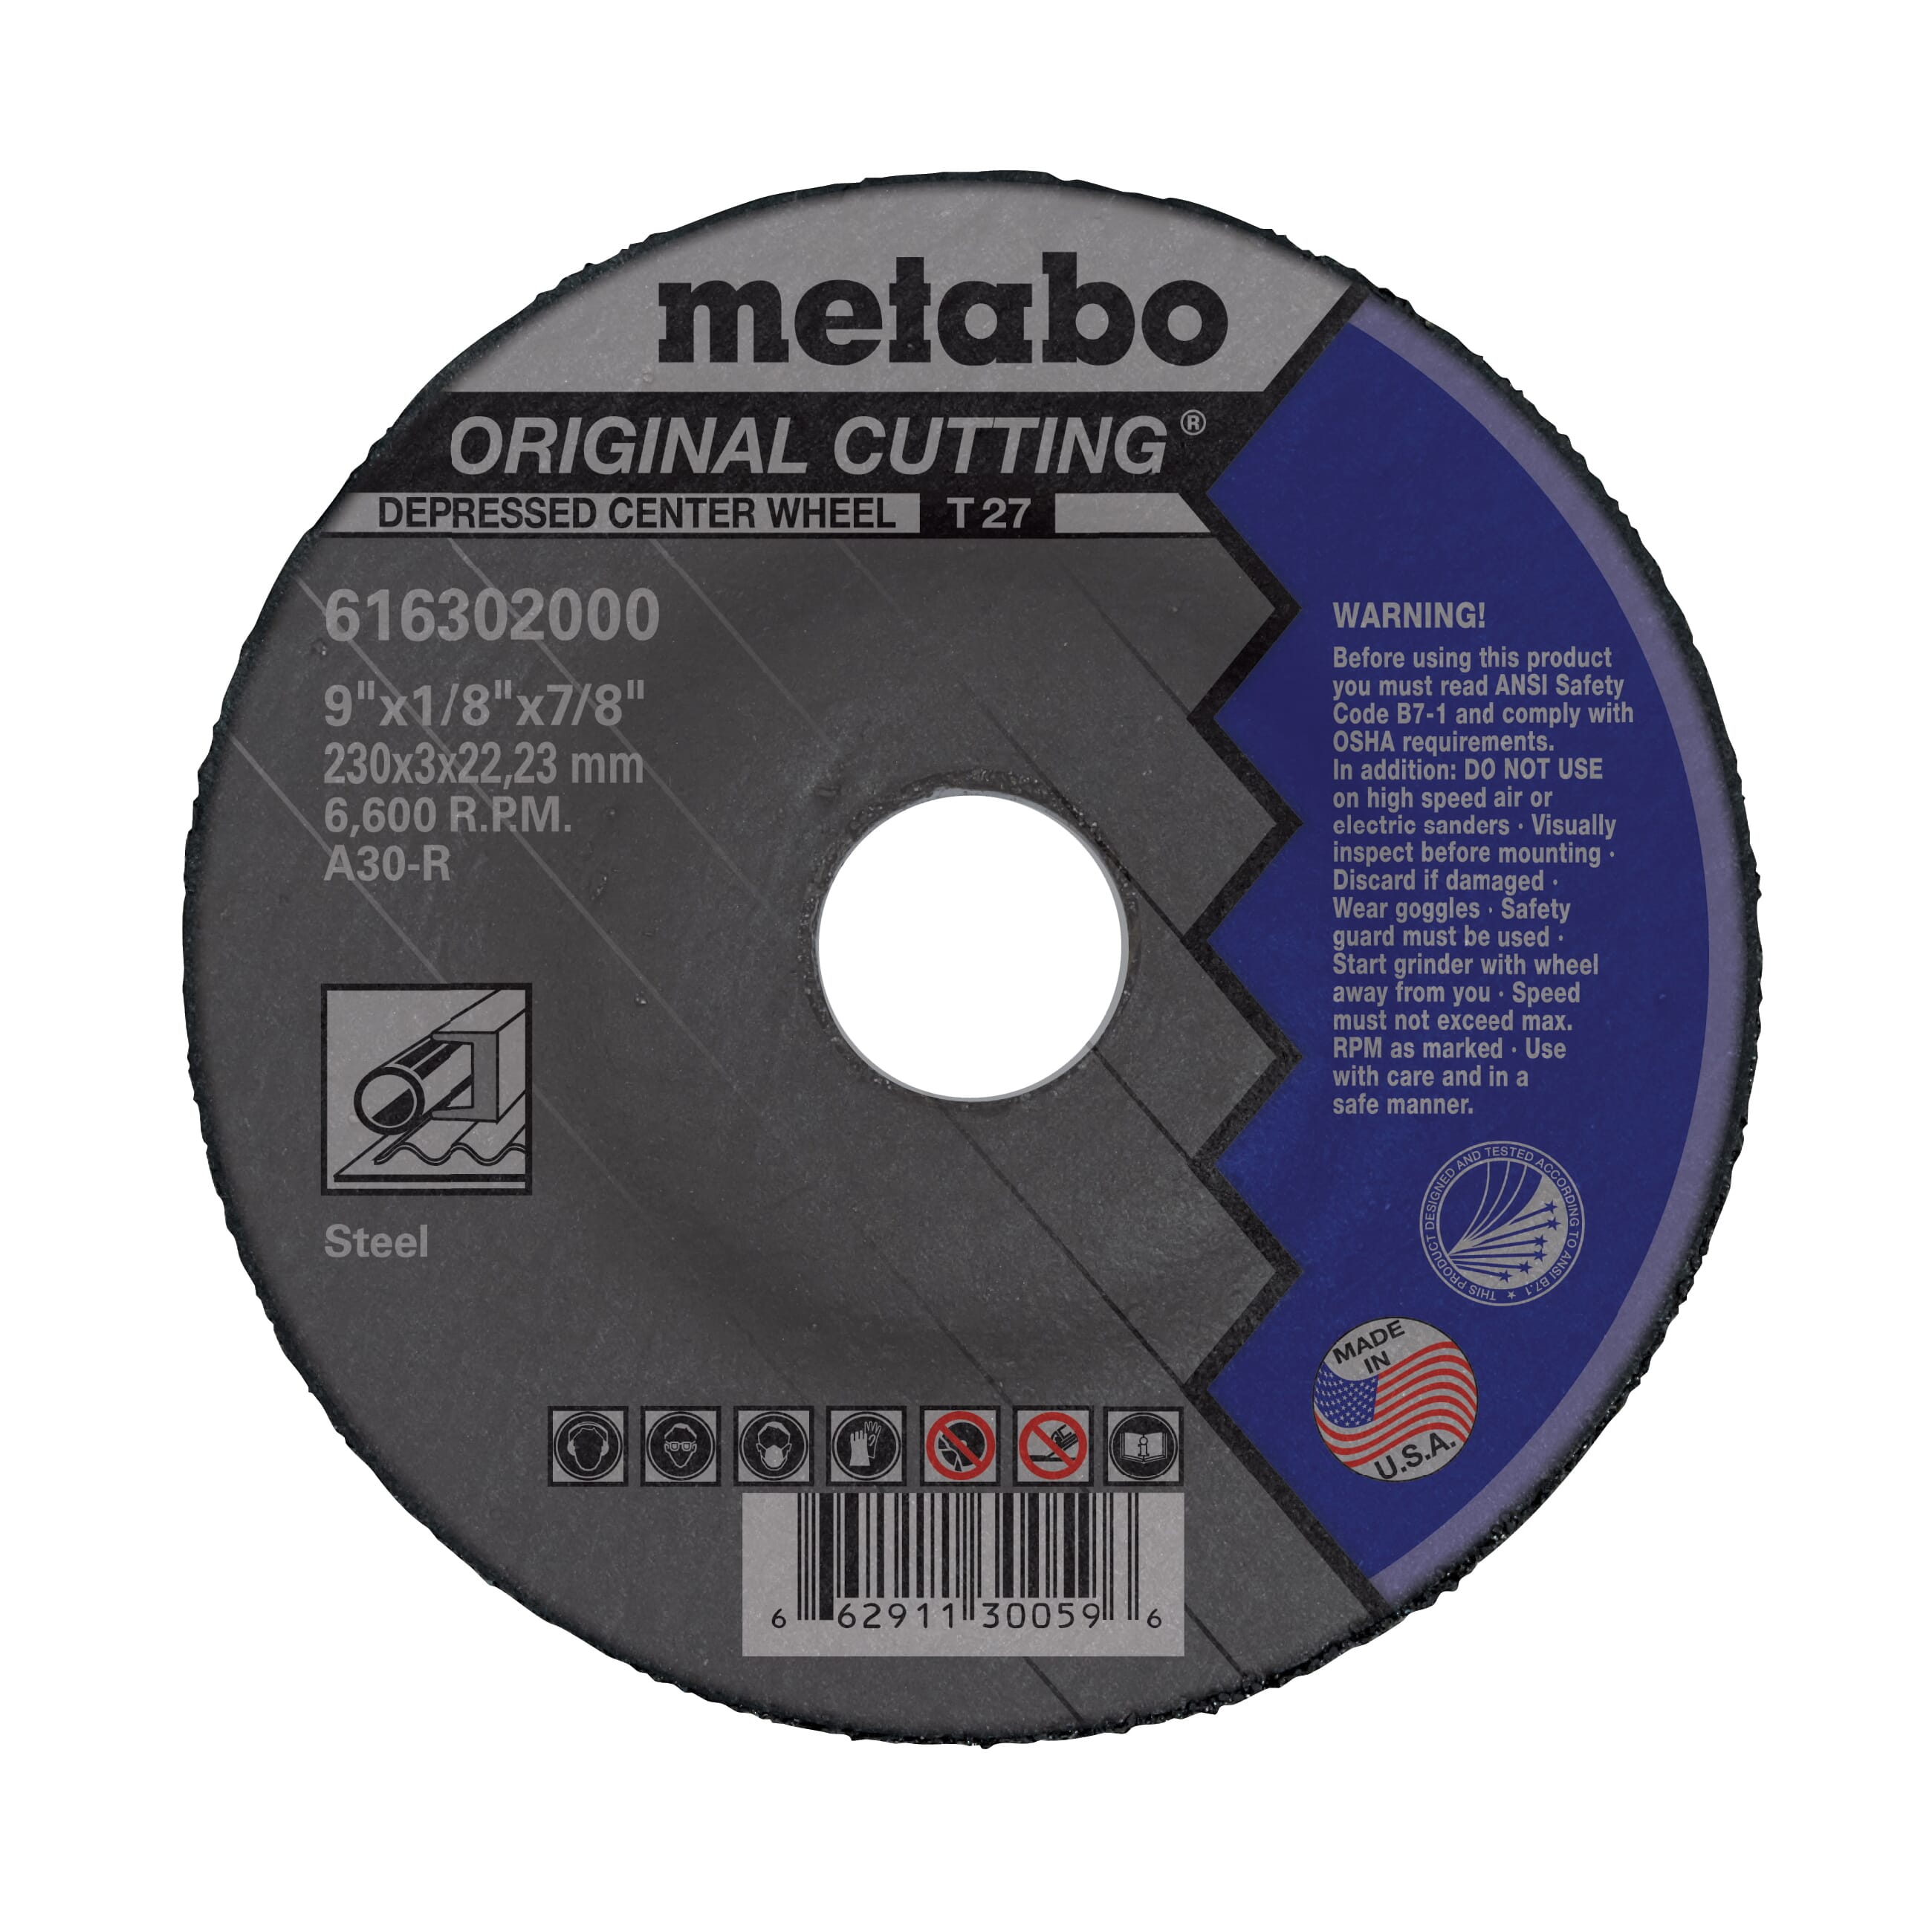 metabo® 616302000 Original Cutting® General Purpose Depressed Center Wheel, 9 in Dia x 1/8 in THK, 7/8 in Center Hole, A30R Grit, Aluminum Oxide Abrasive